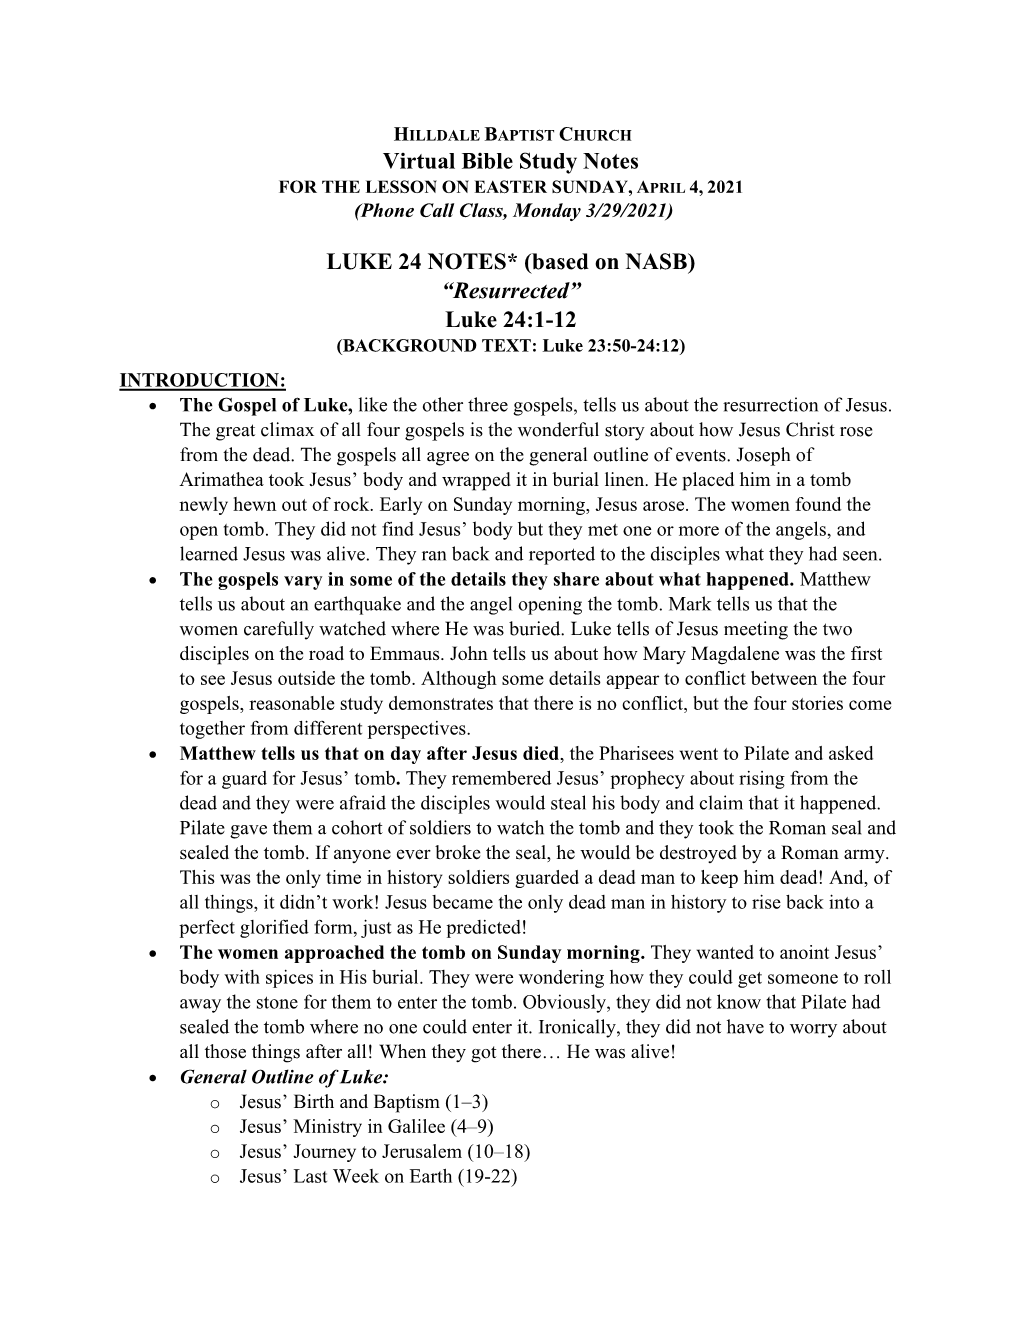 Virtual Bible Study Notes LUKE 24 NOTES